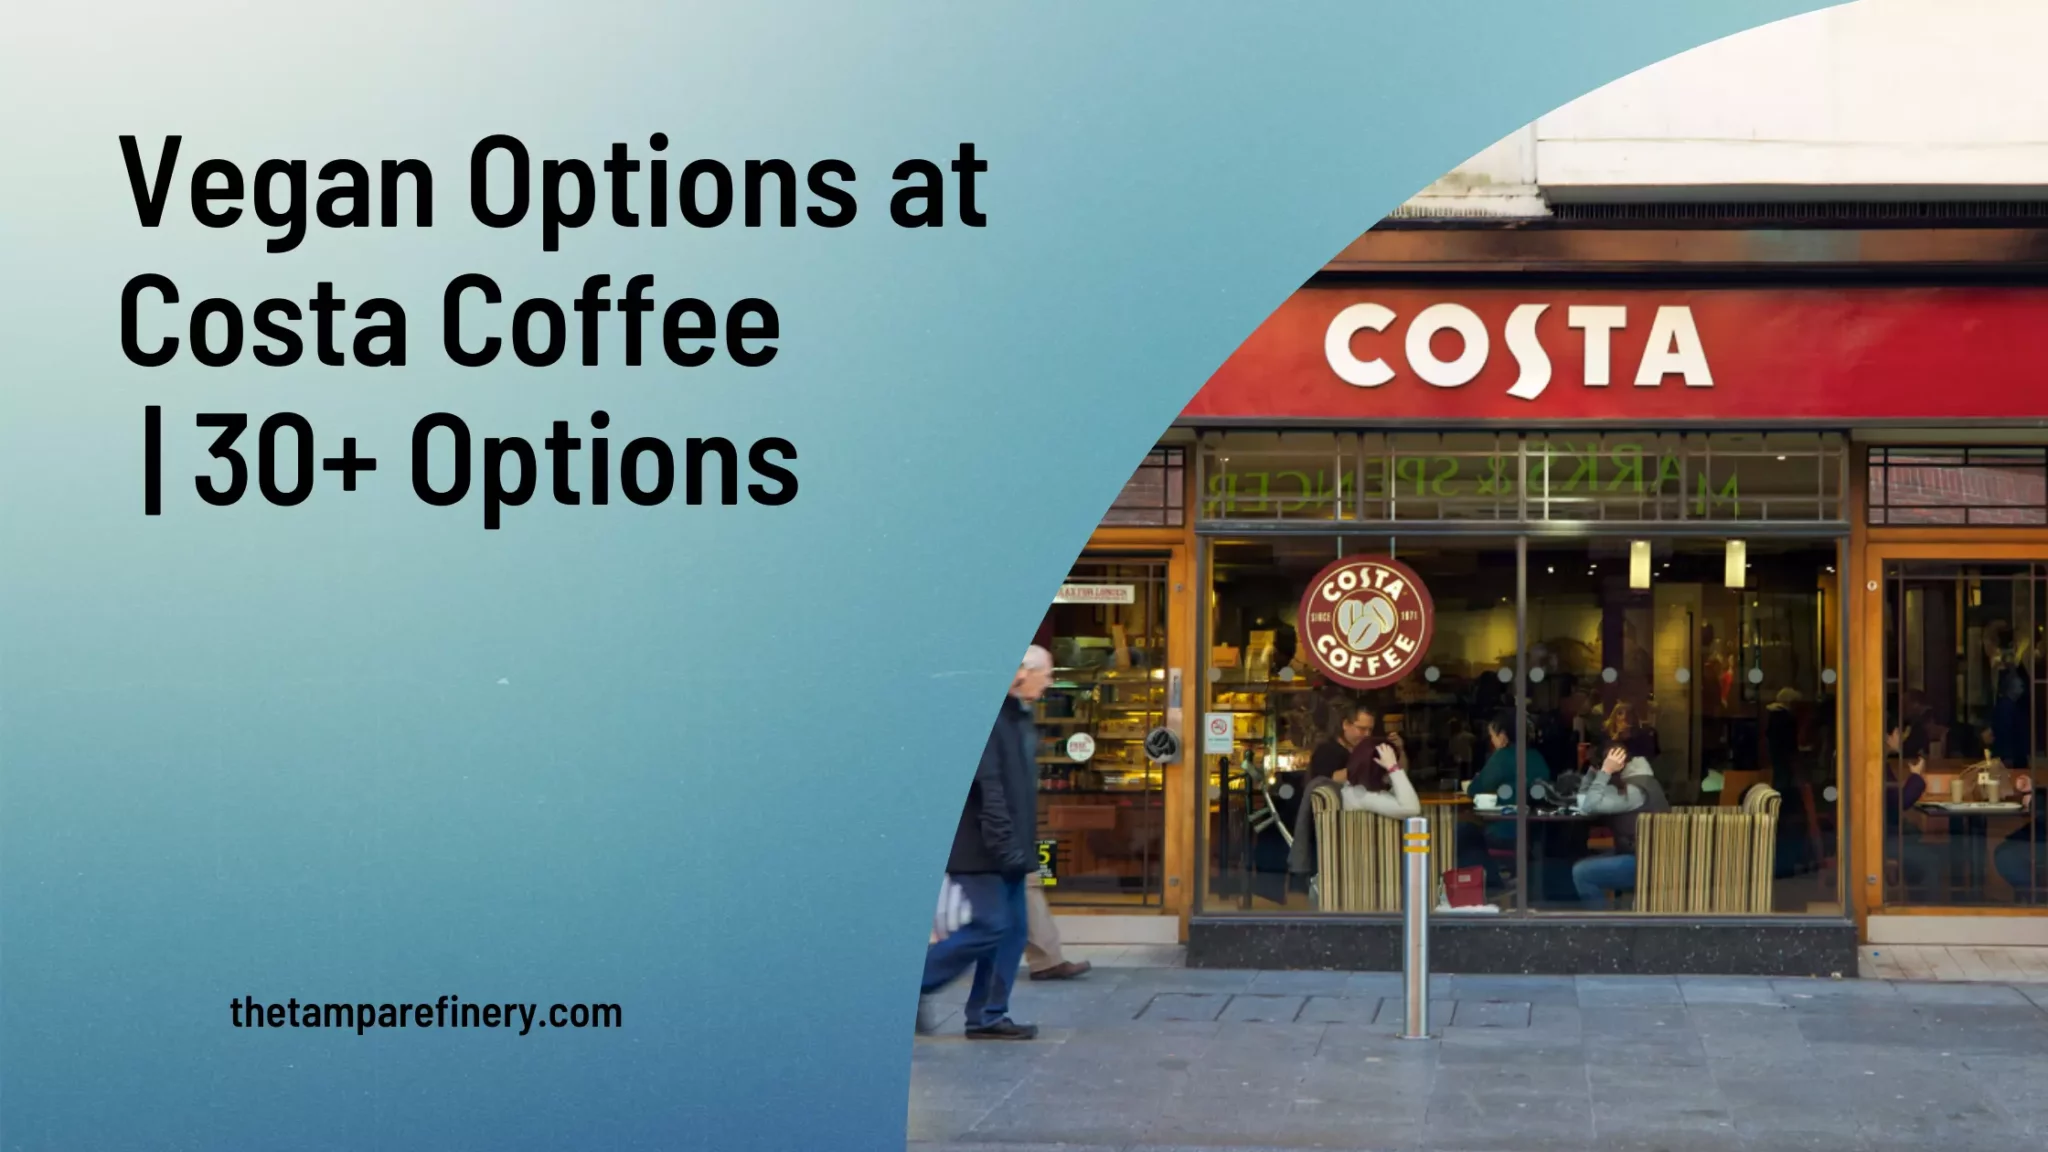 Vegan Options at Costa Coffee